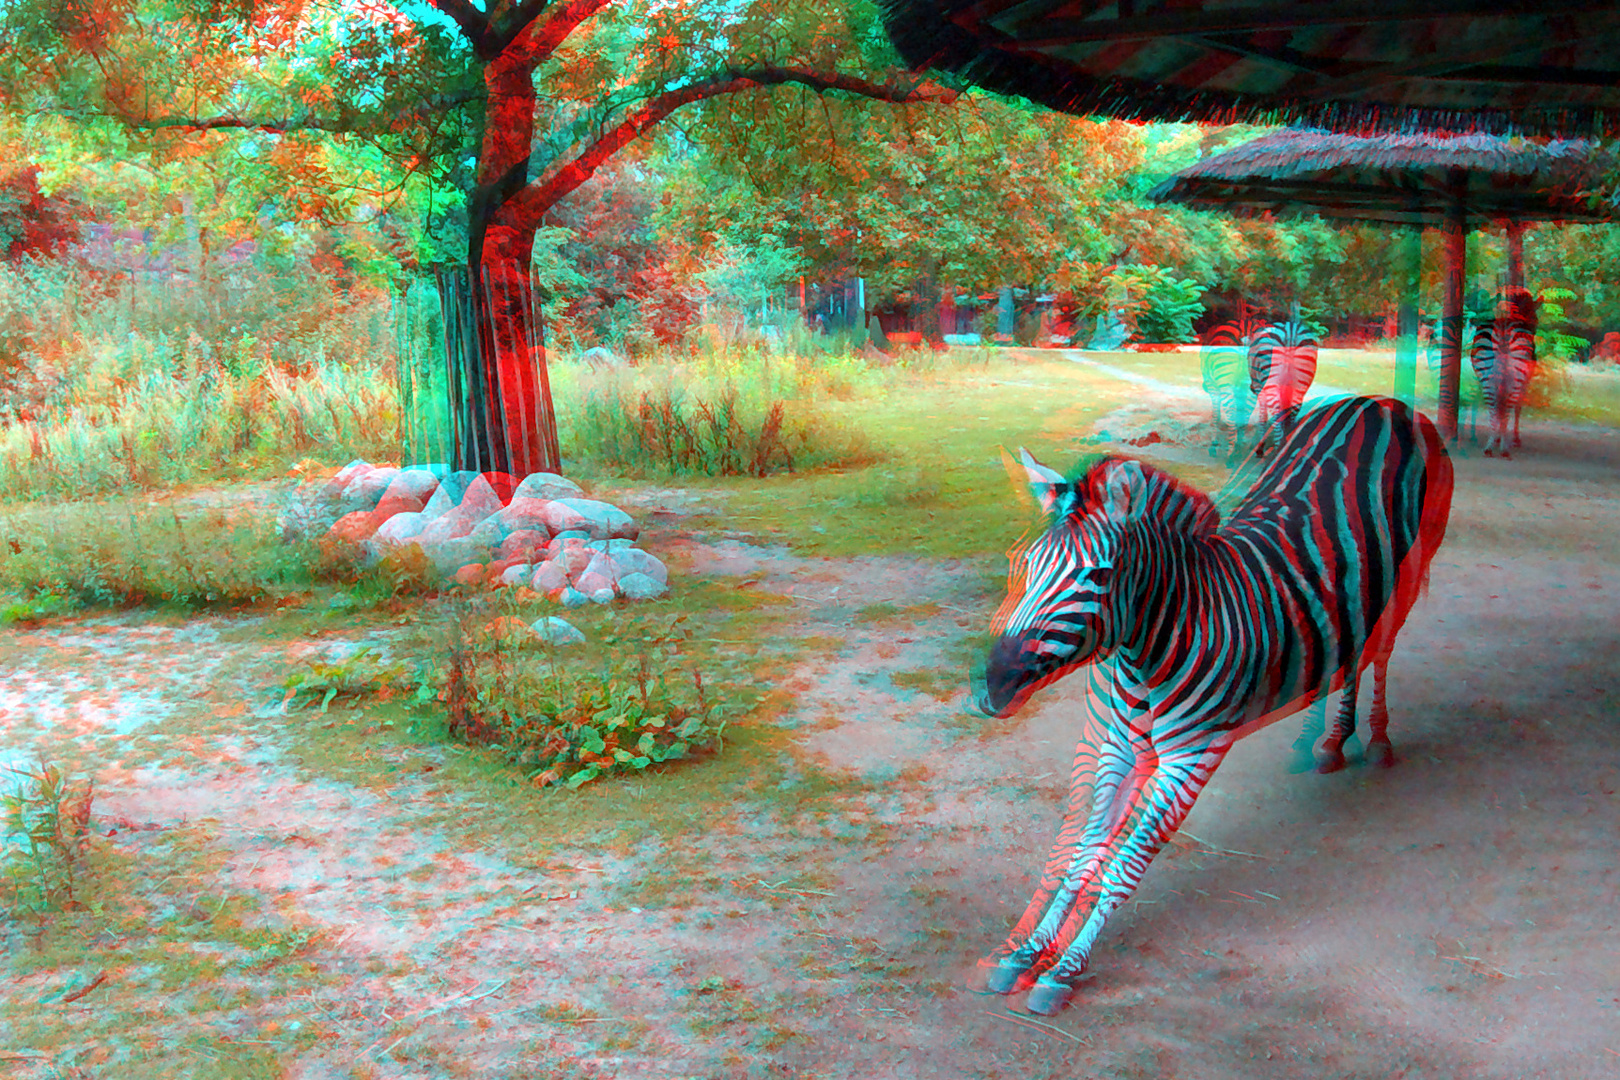 Zebra Blijdorp Zoo Rotterdam 3D GoPro